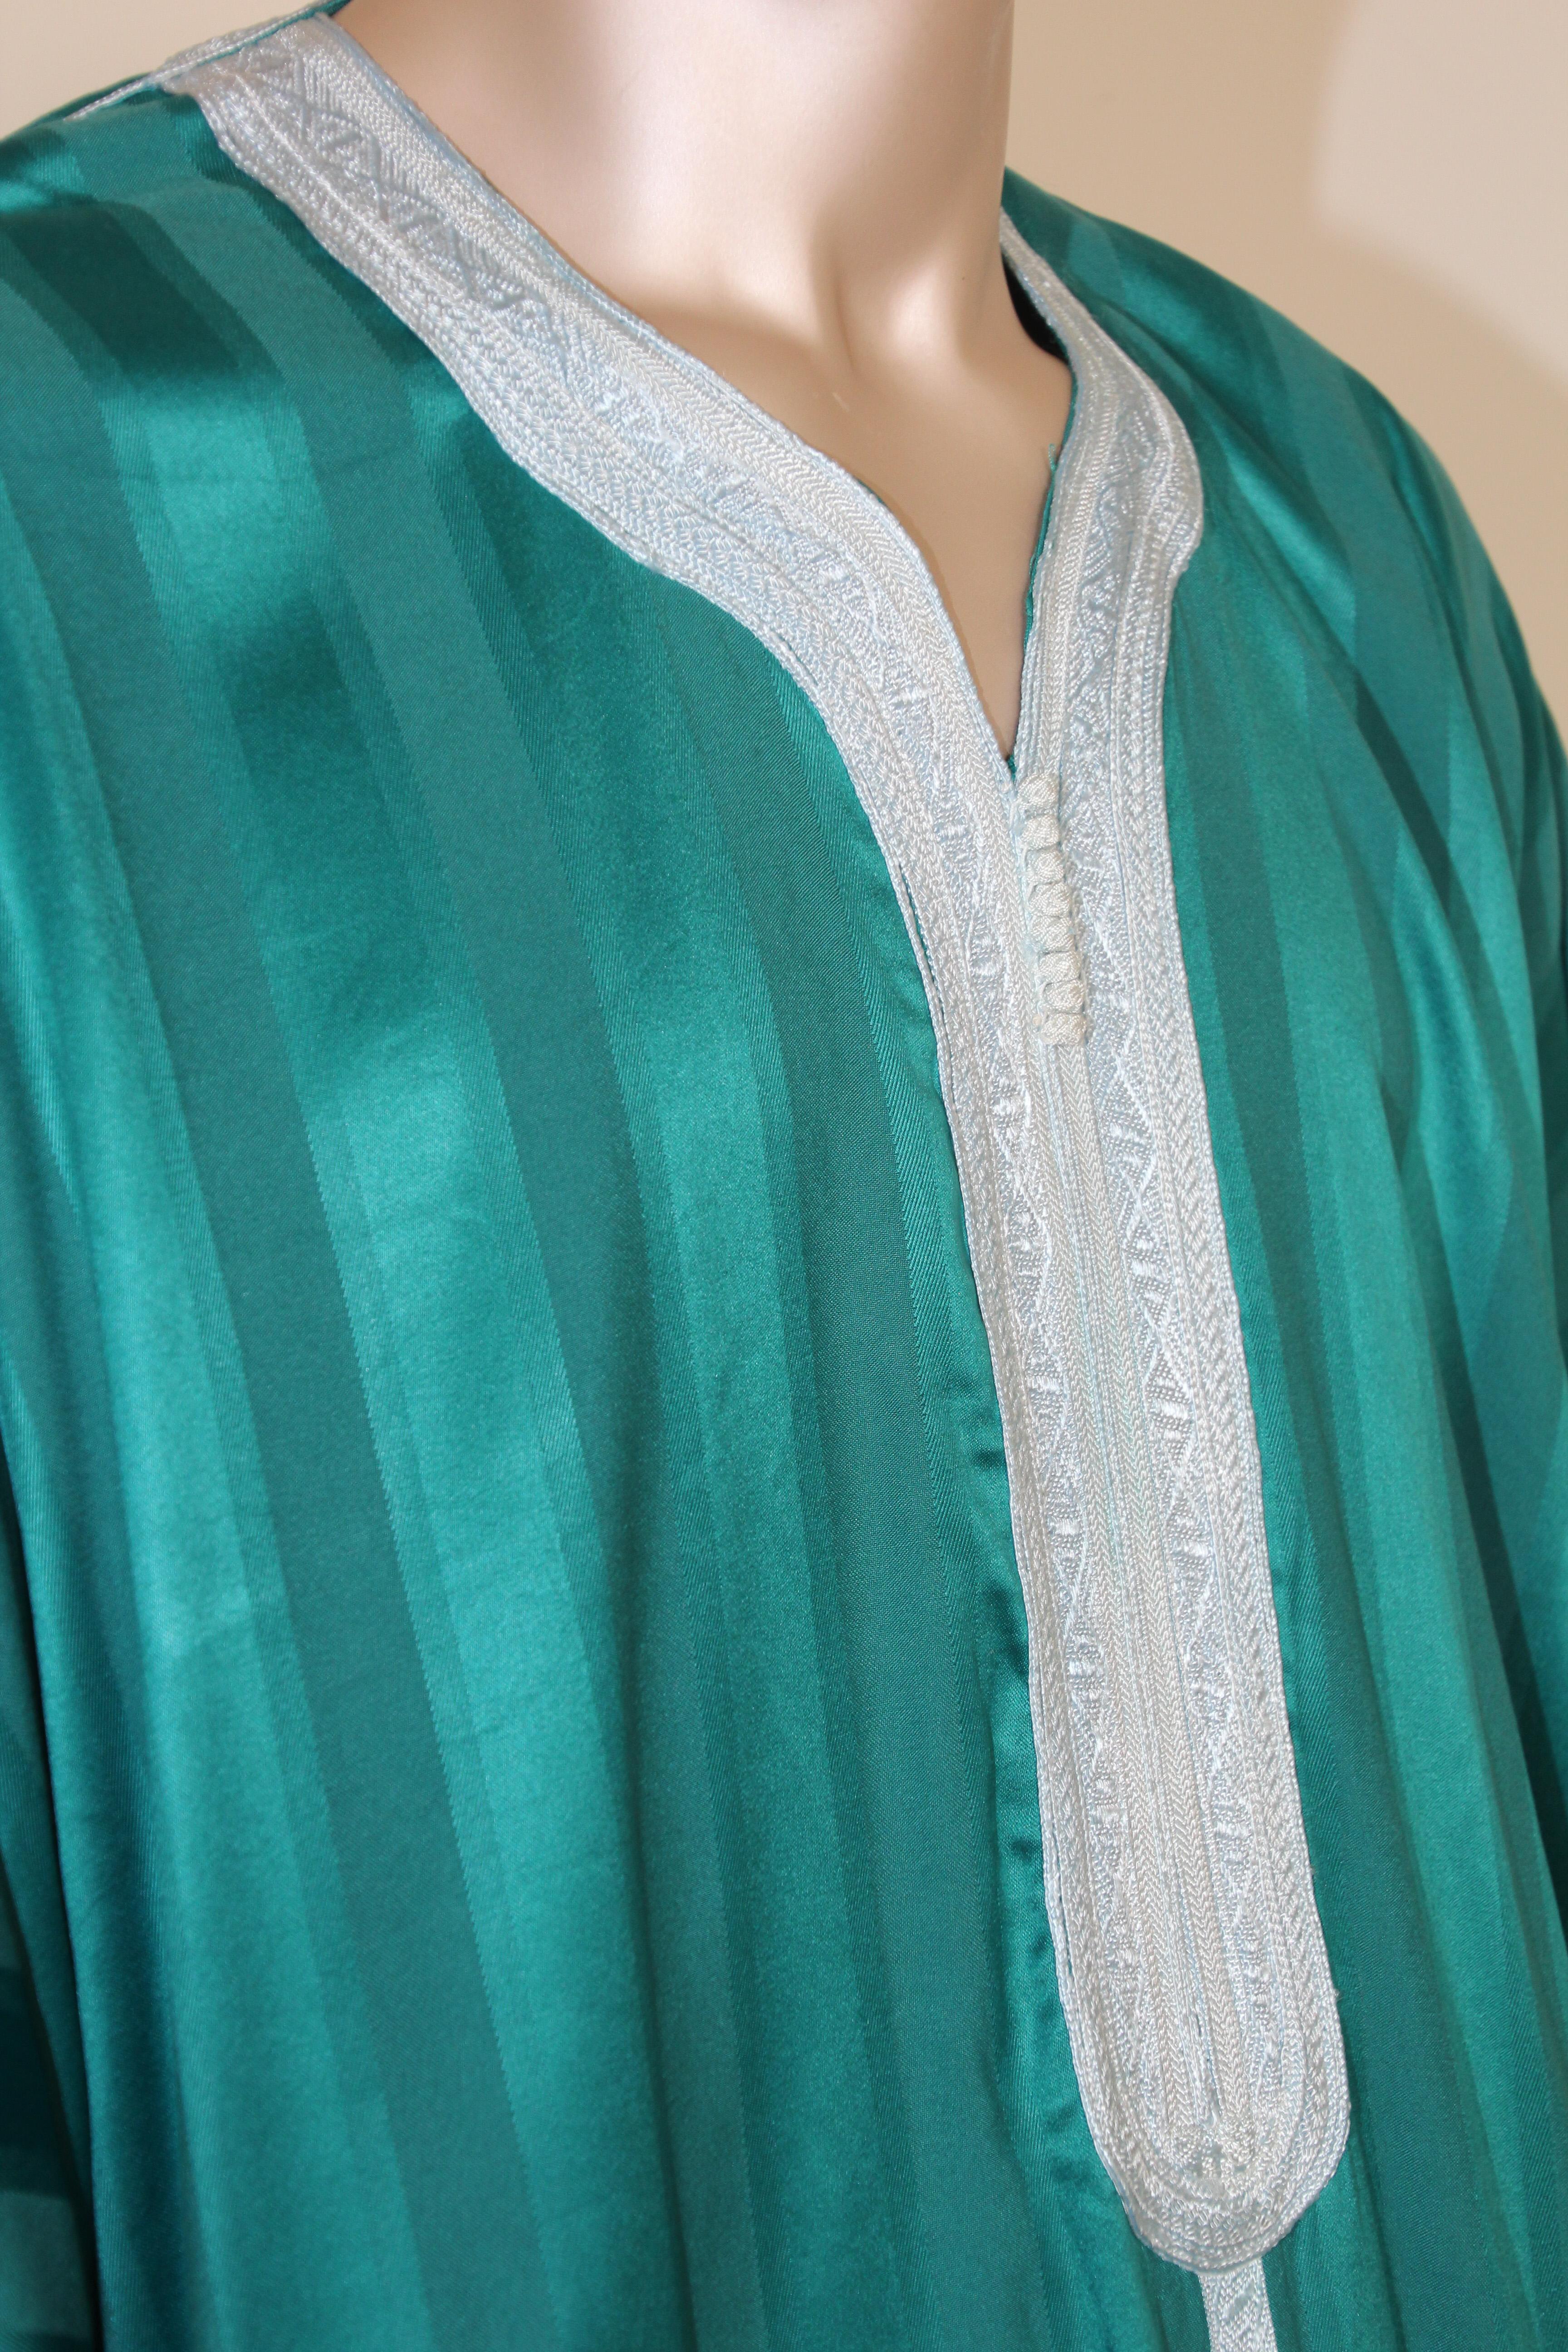 Tissu Caftan marocain vintage pour homme vert émeraude en vente